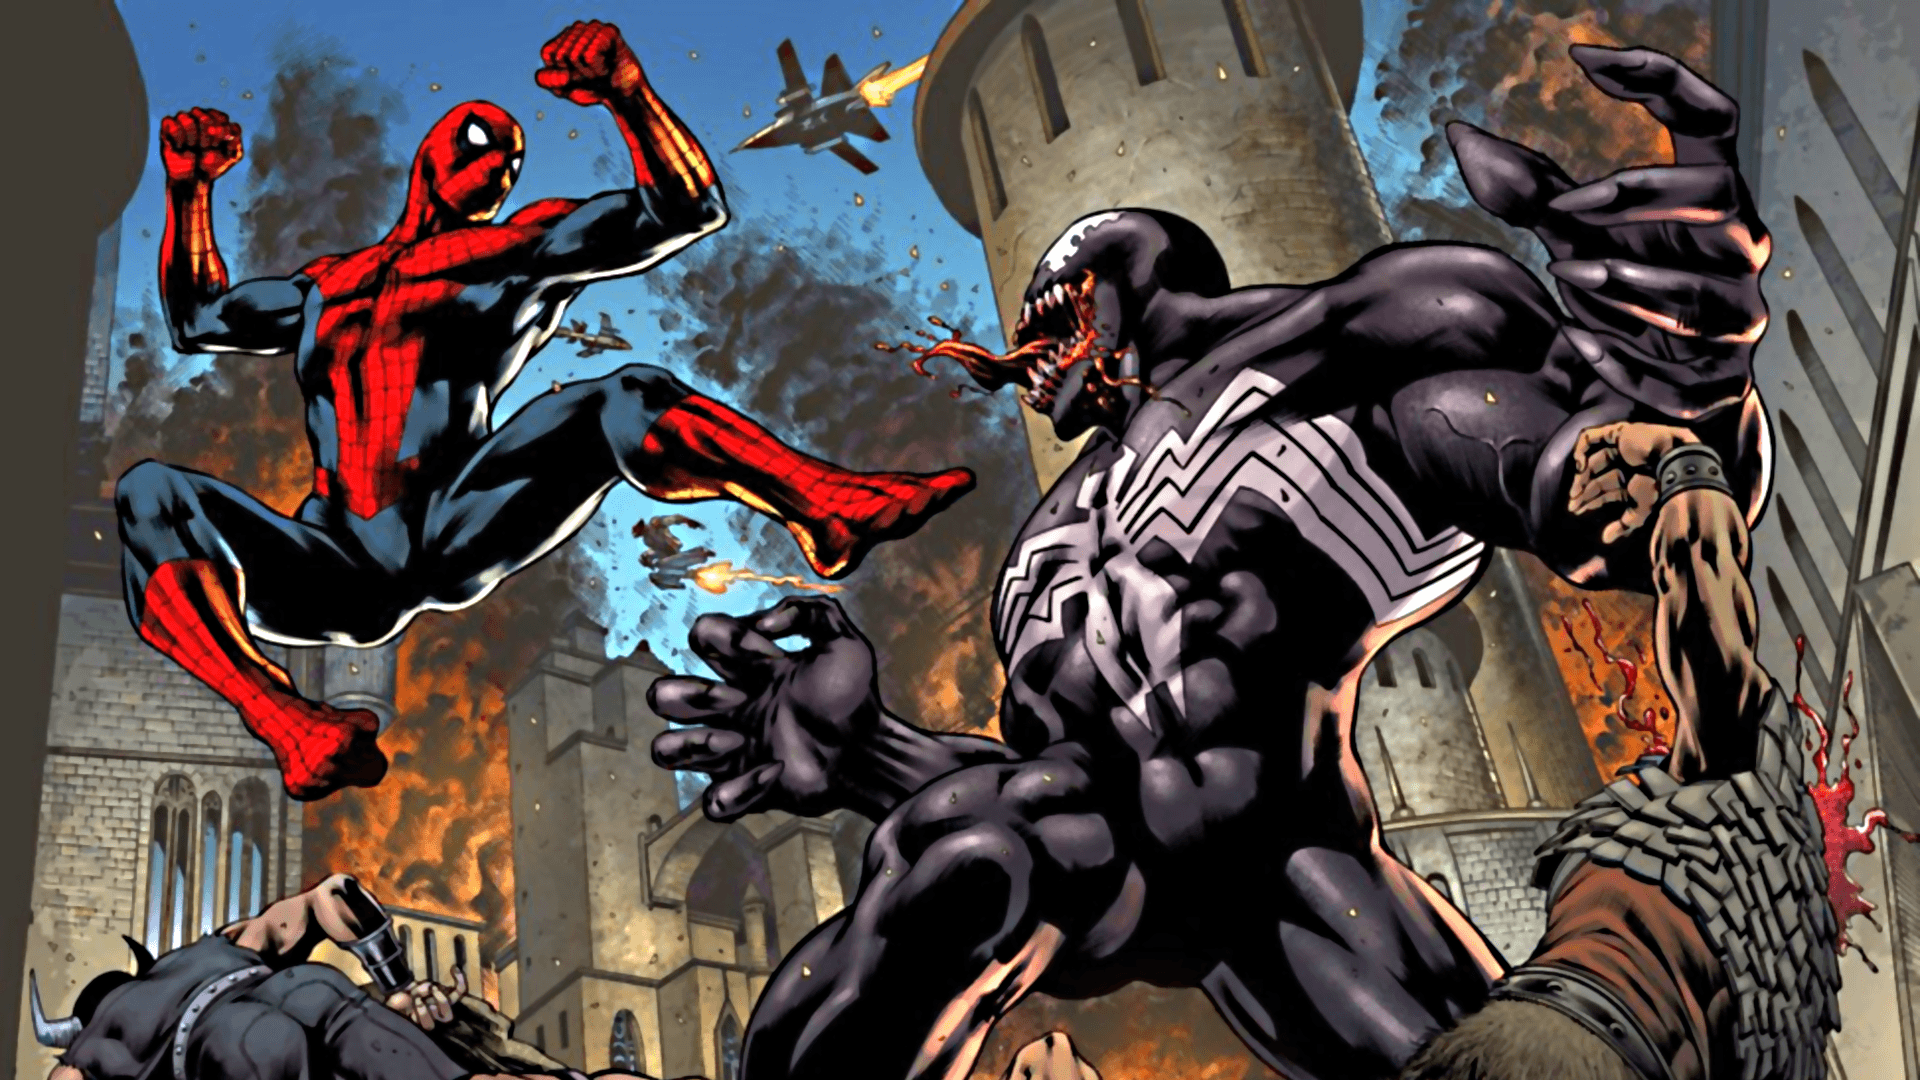 Venom Vs Spiderman Wallpaper